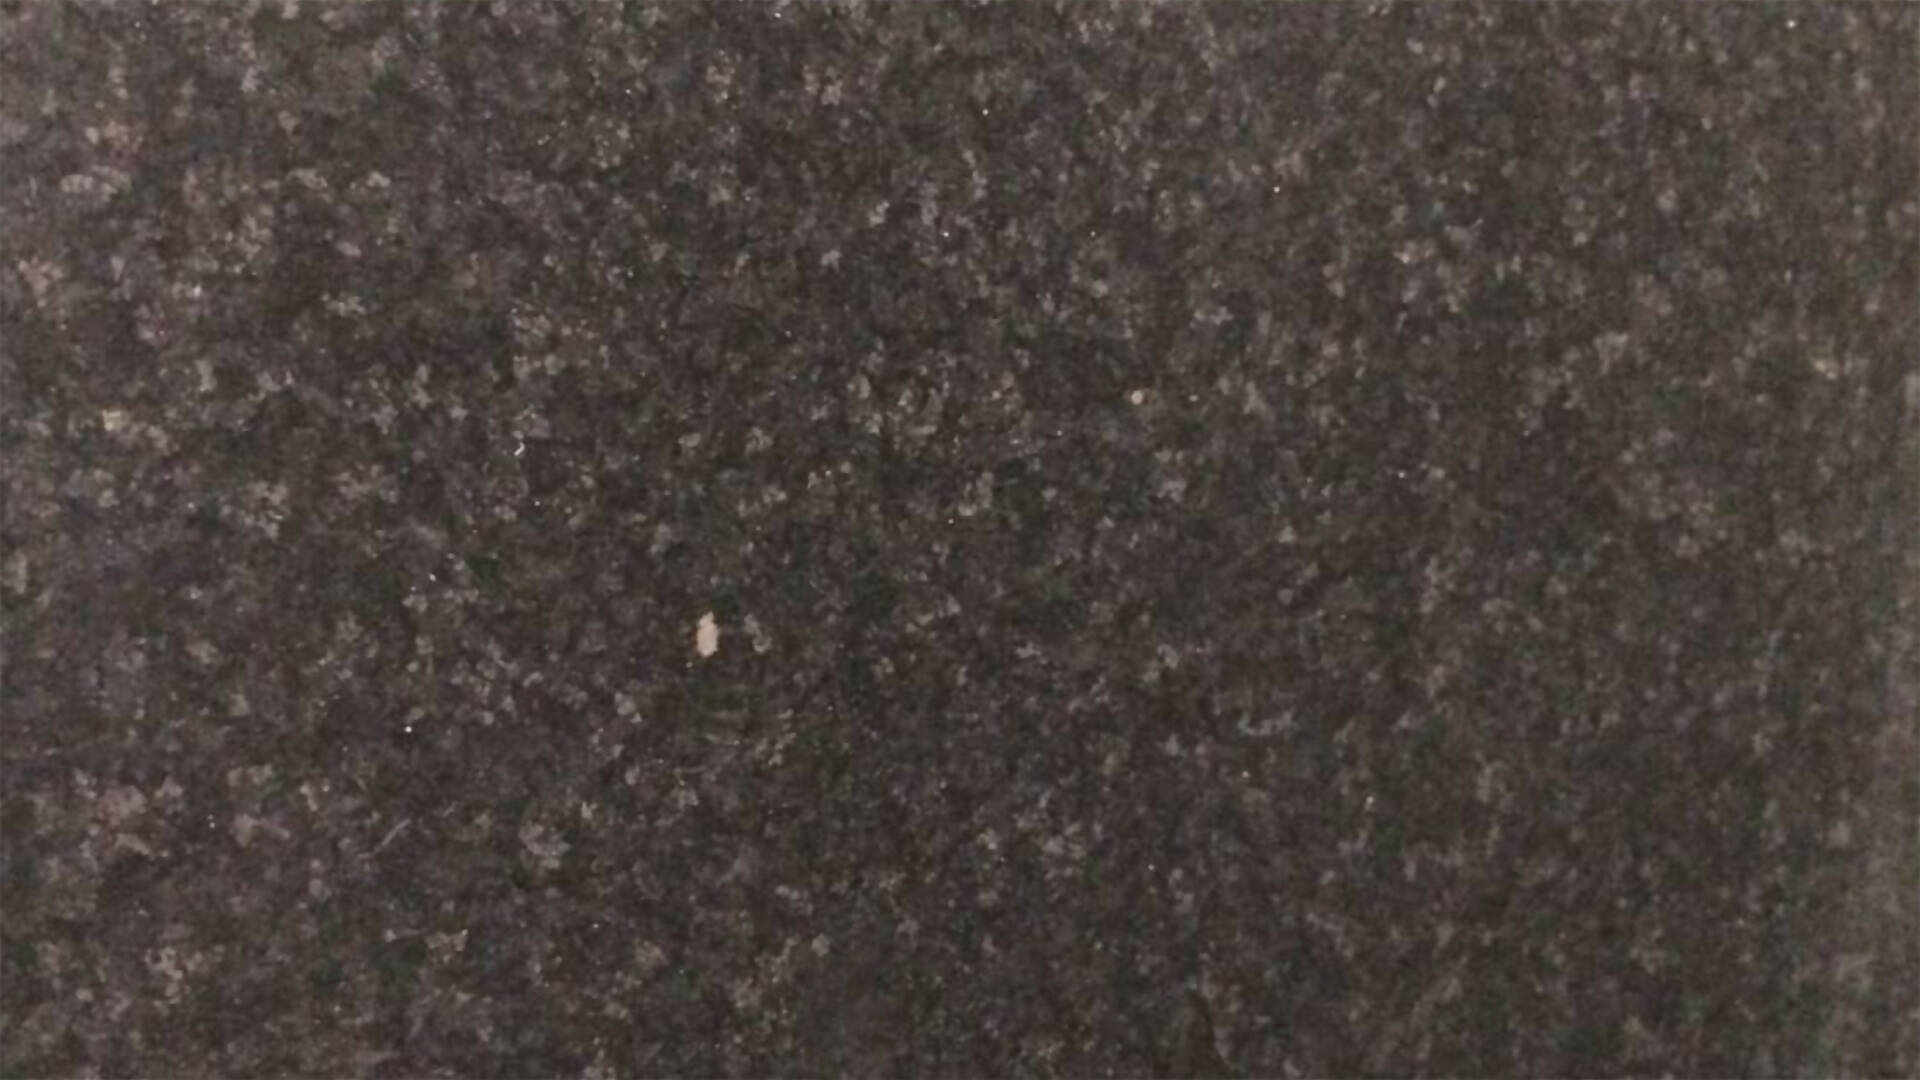 COPPER BLACK GRANITE,Granite,Worldwide Stone Ltd,www.work-tops.com